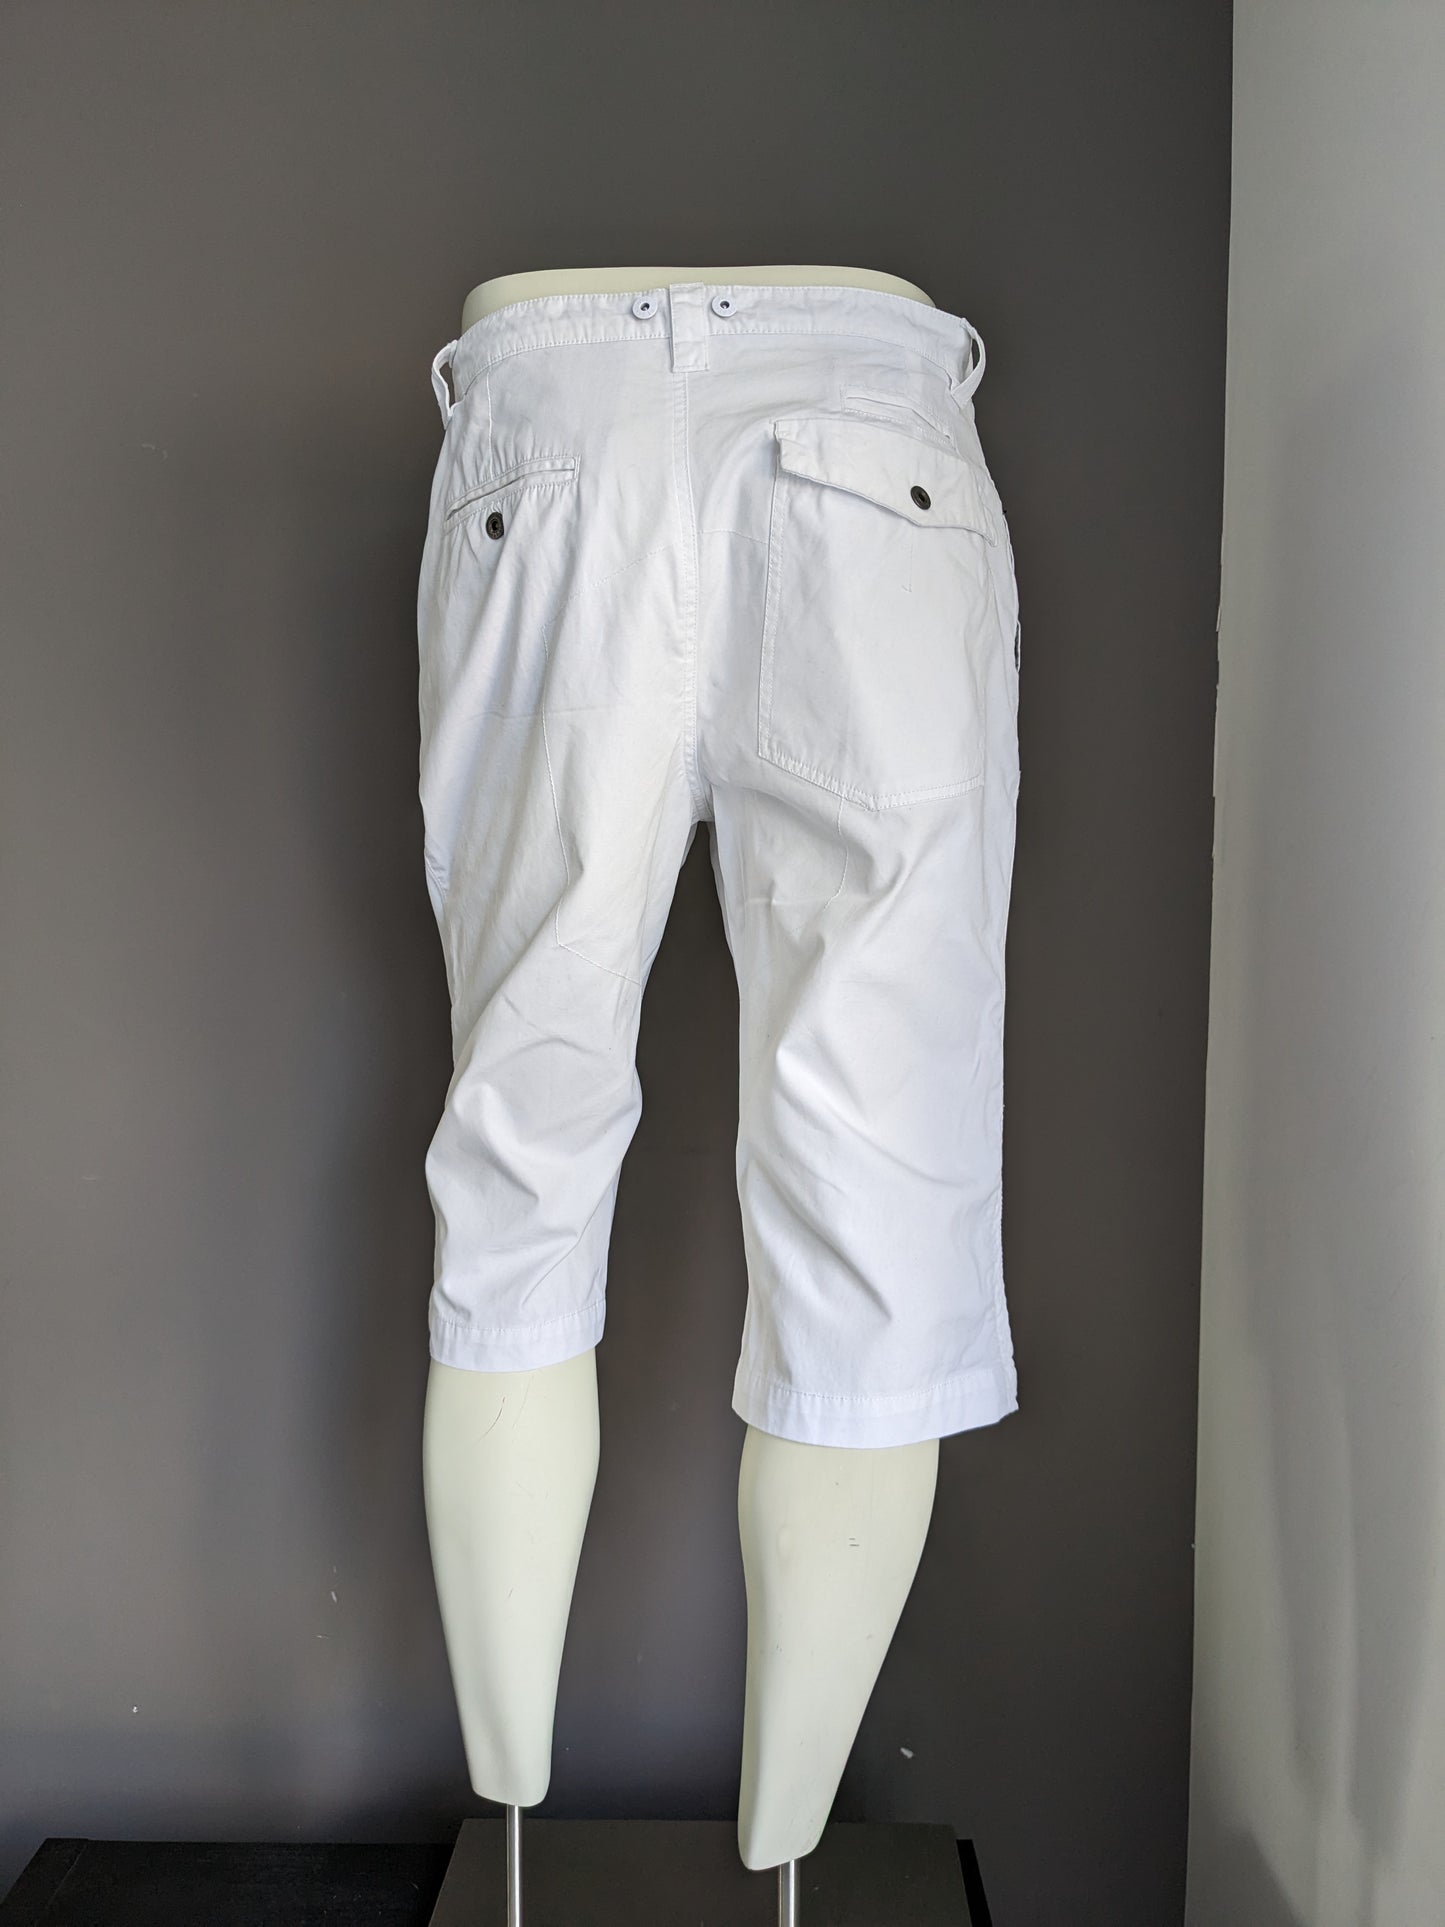 Pulp & Bear 3 / 4th Shorts avec application Stustriers. Blanc. Taille W34.